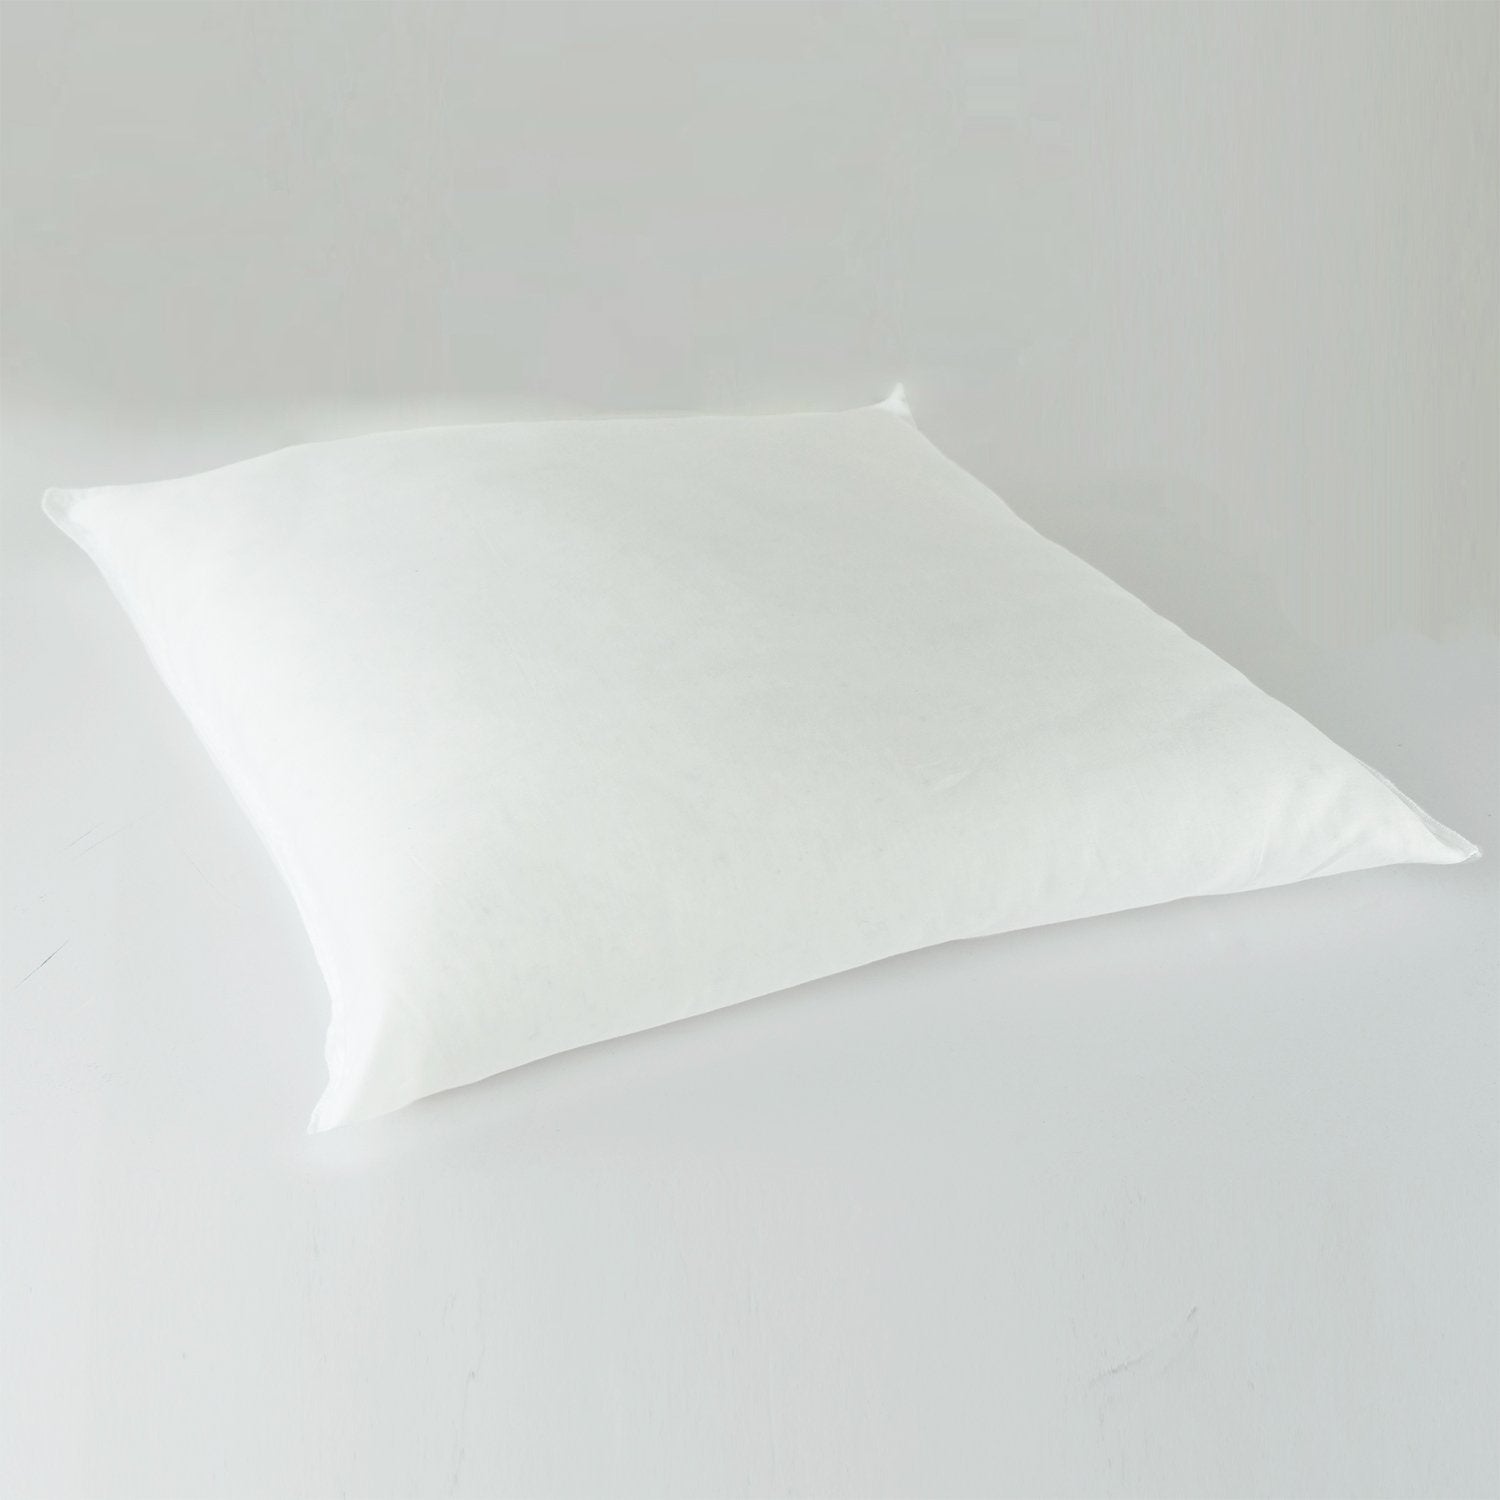 J-Life Shima Navy Zabuton Floor Pillow_Pillows & Shams_Zabuton Floor Pillows_100% Cotton_Reversible